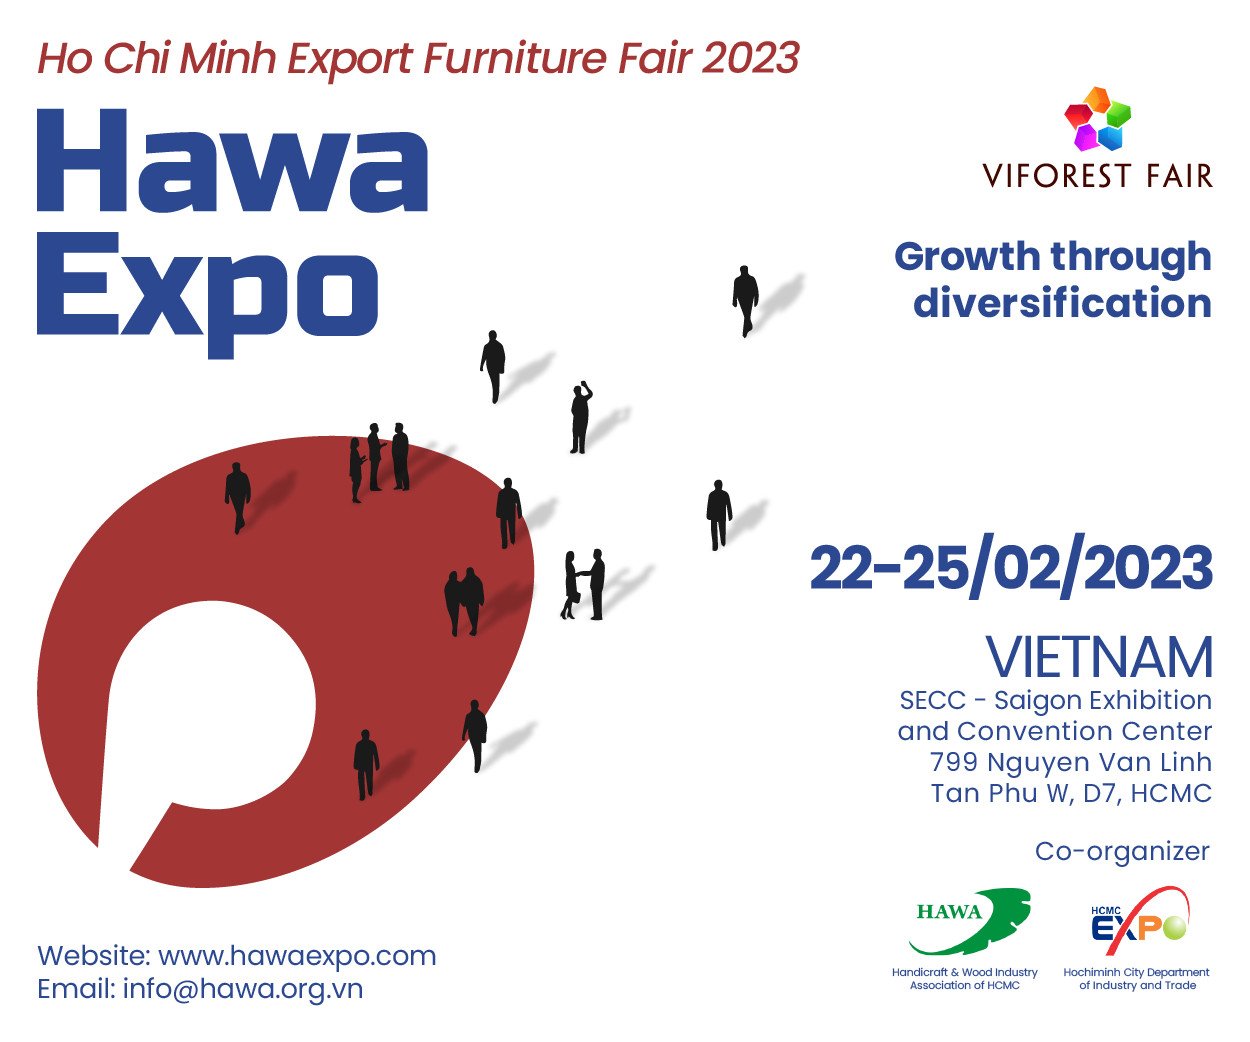 HO CHI MINH EXPORT FURNITURE FAIR 2023 HawaExpo 2023 - Growth Through Diversification